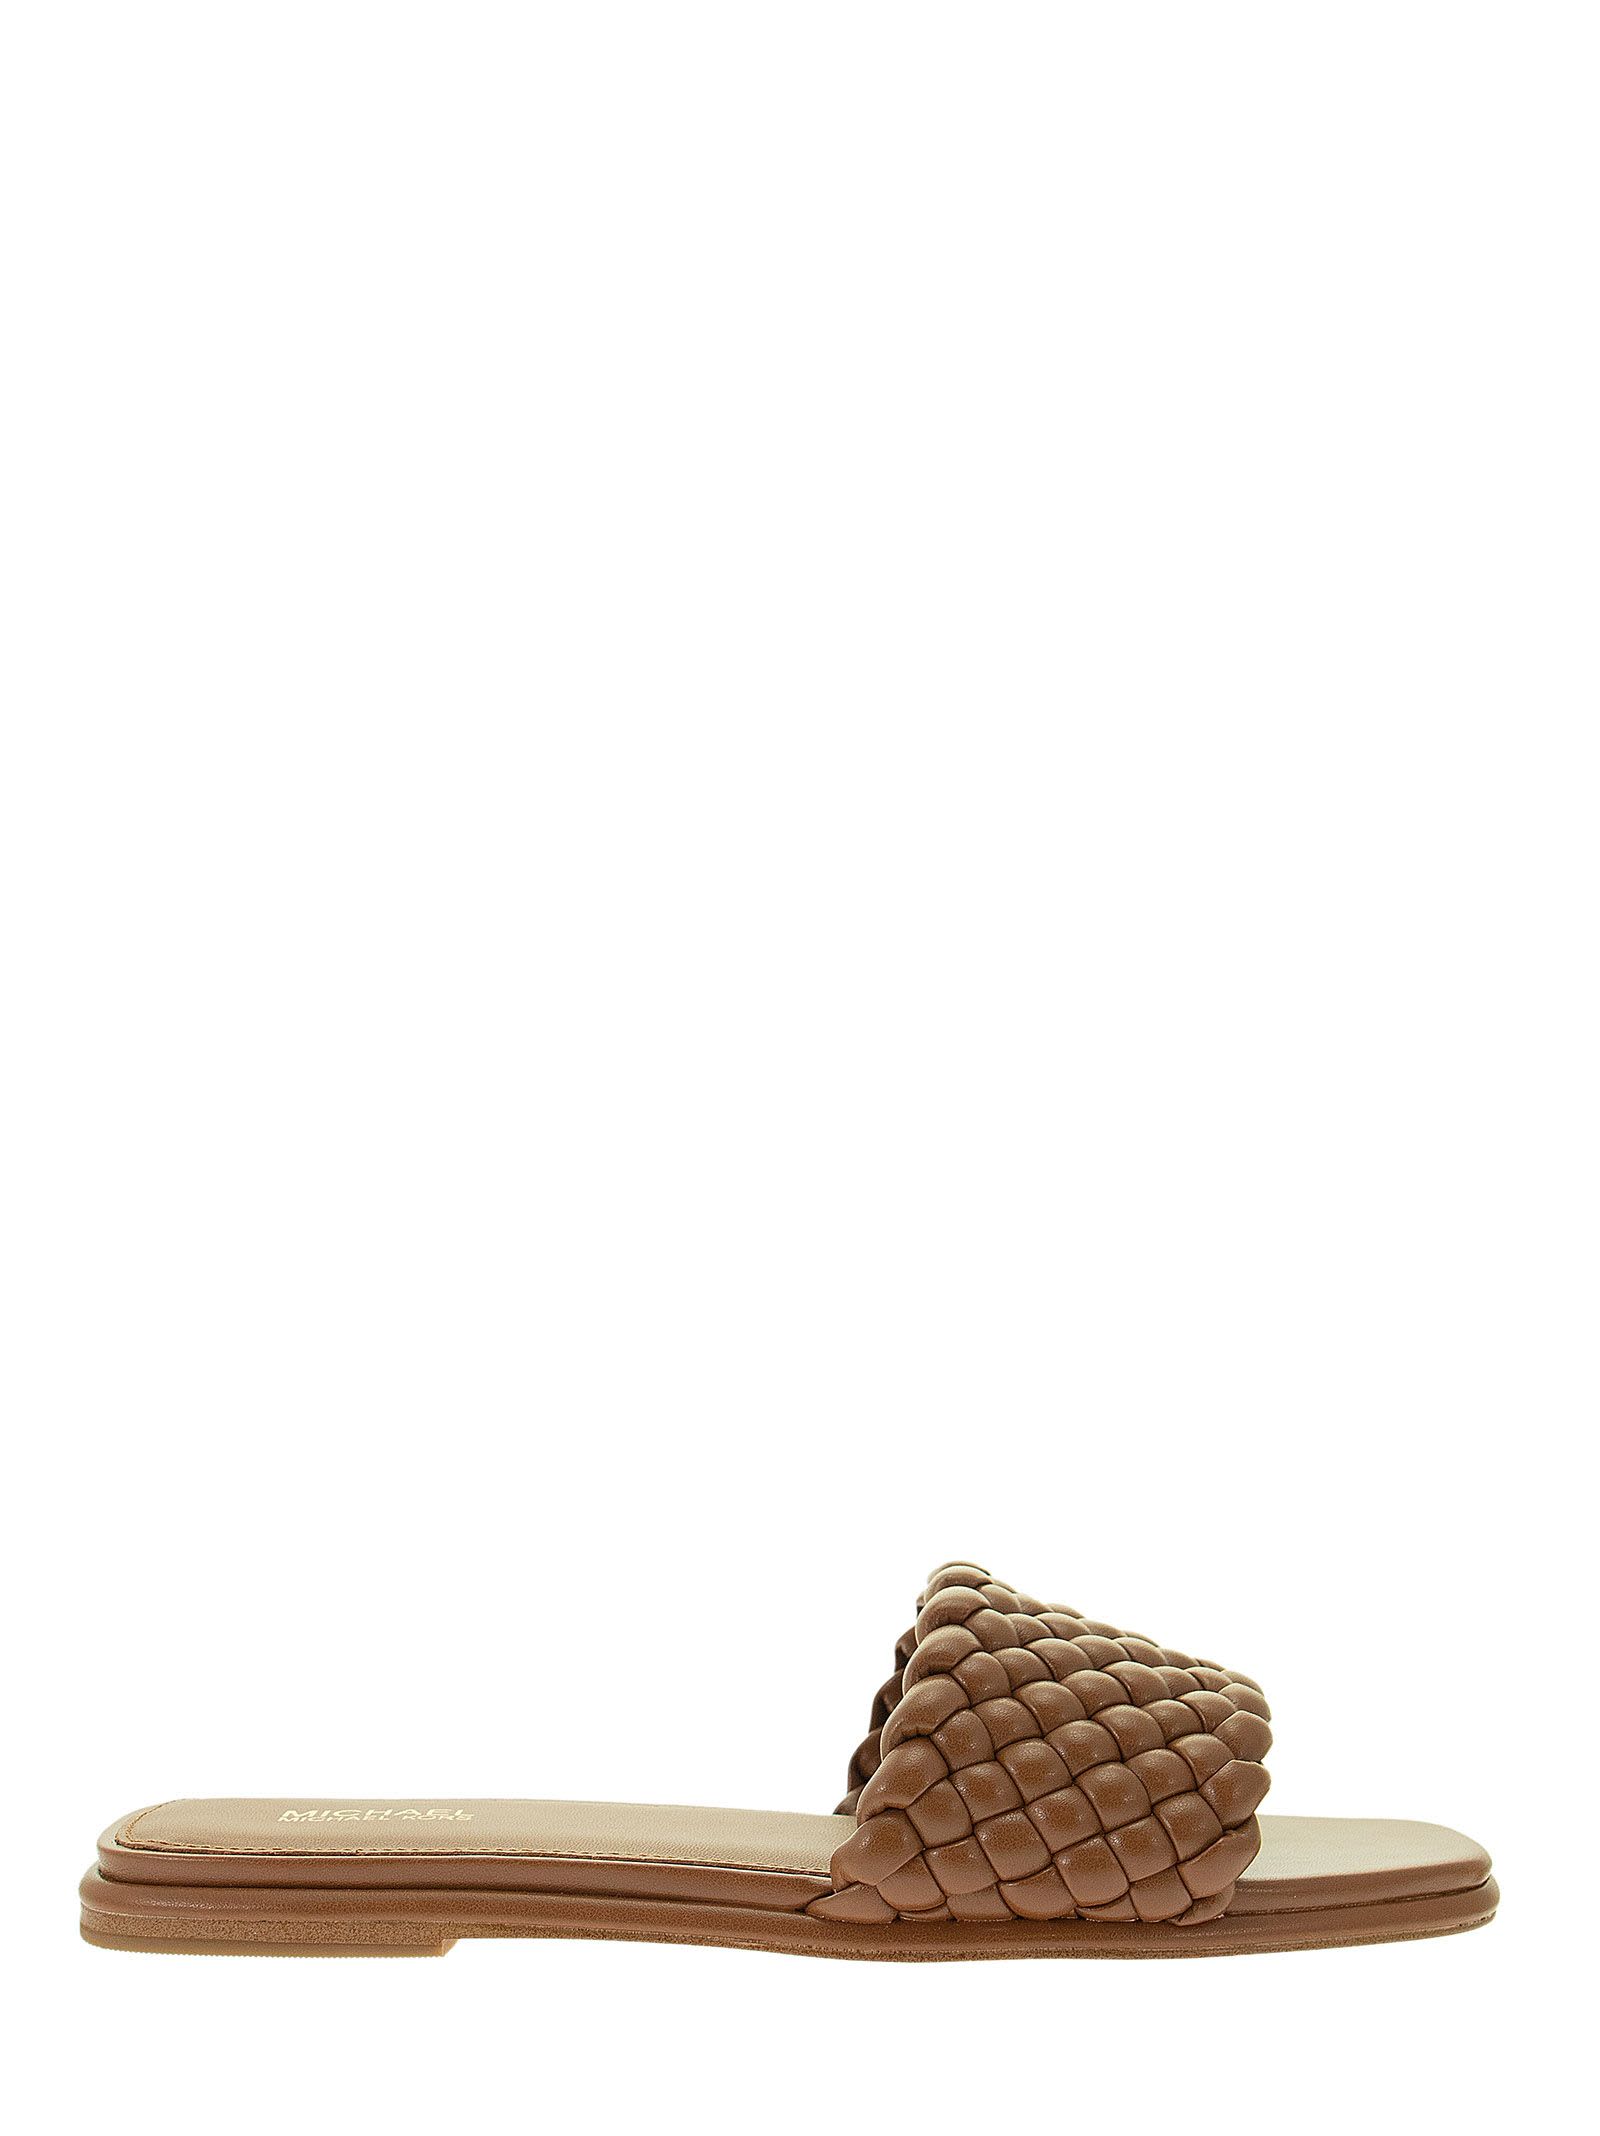 Buy Michael Kors Amelia - Braided Slide Sandal online, shop Michael Kors shoes with free shipping